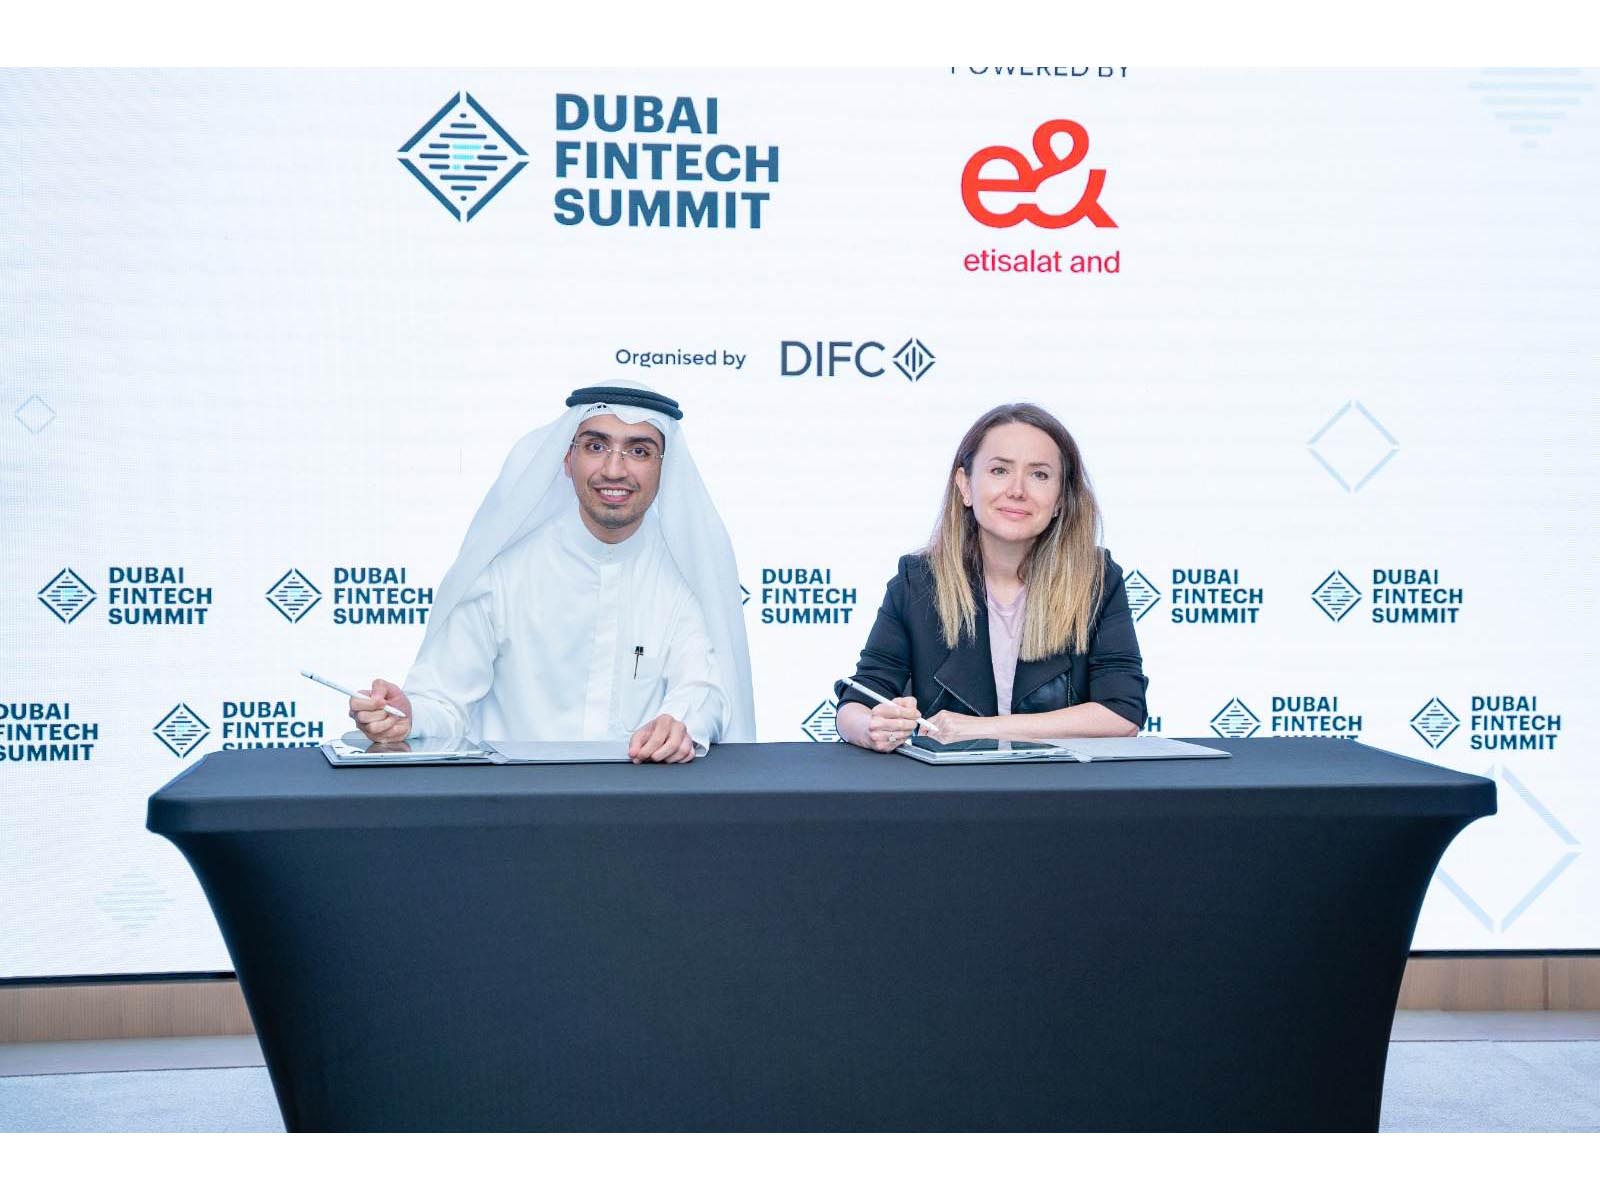 e& life joins Dubai FinTech Summit as a powered by sponsor